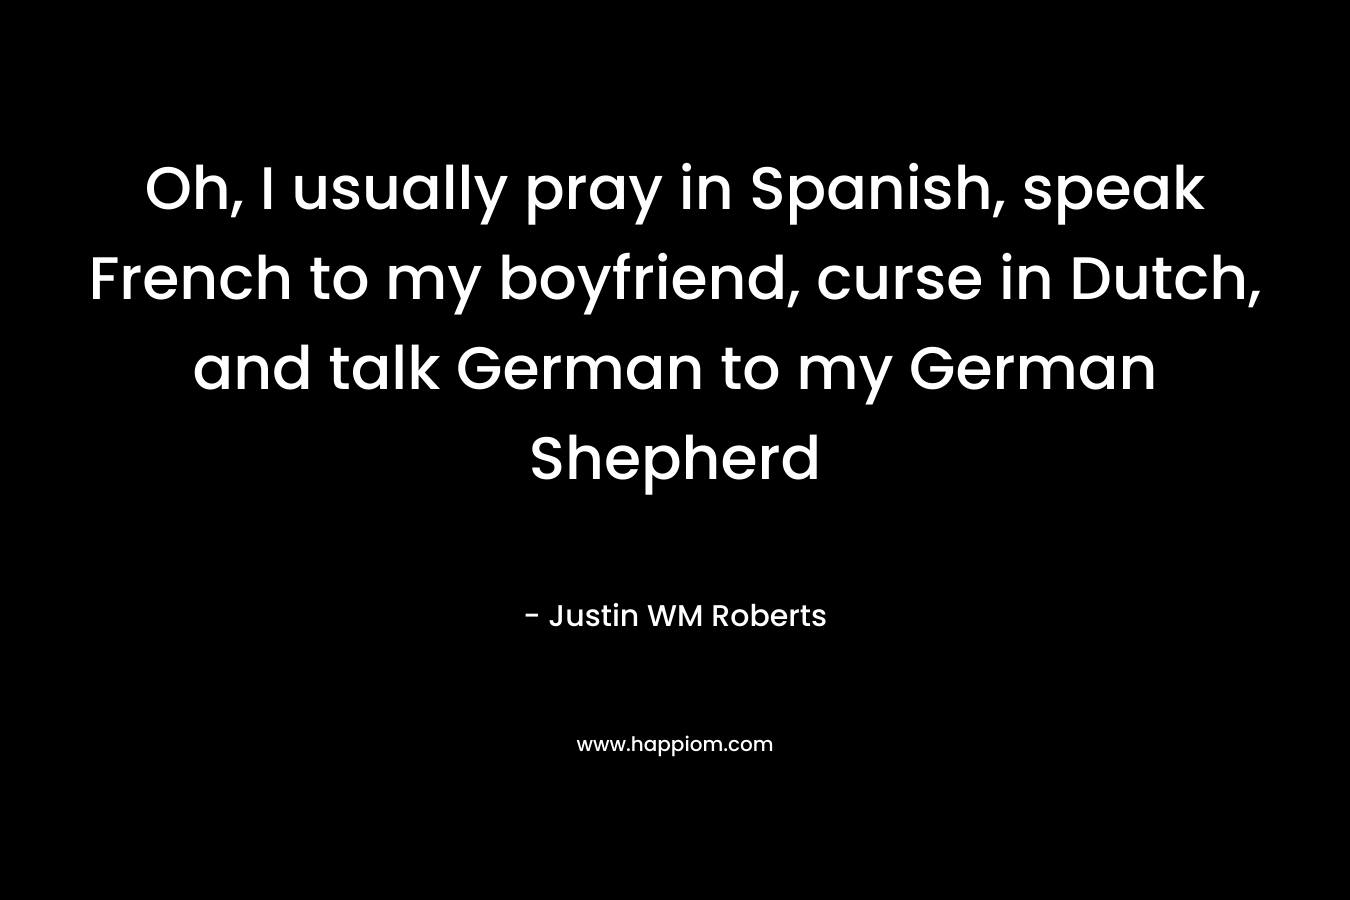 Oh, I usually pray in Spanish, speak French to my boyfriend, curse in Dutch, and talk German to my German Shepherd